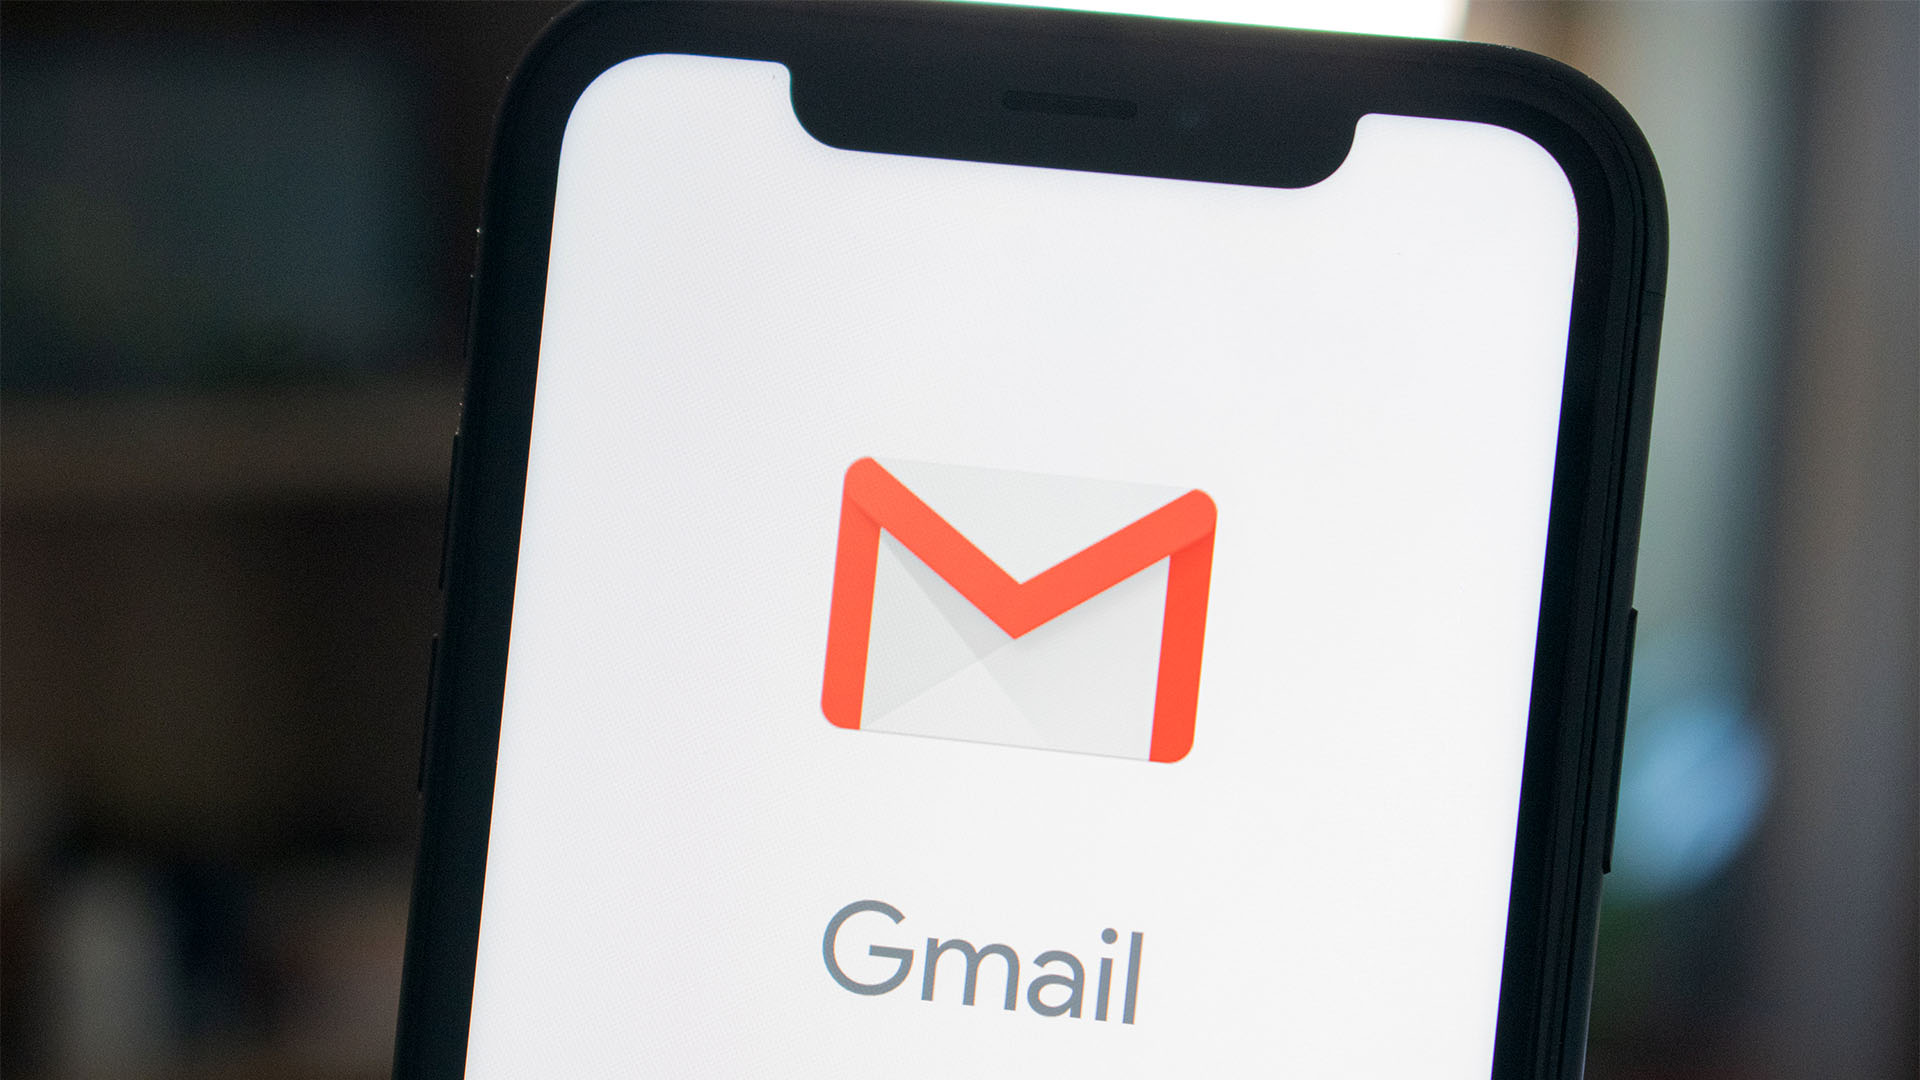 Gmail logo on iPhone X